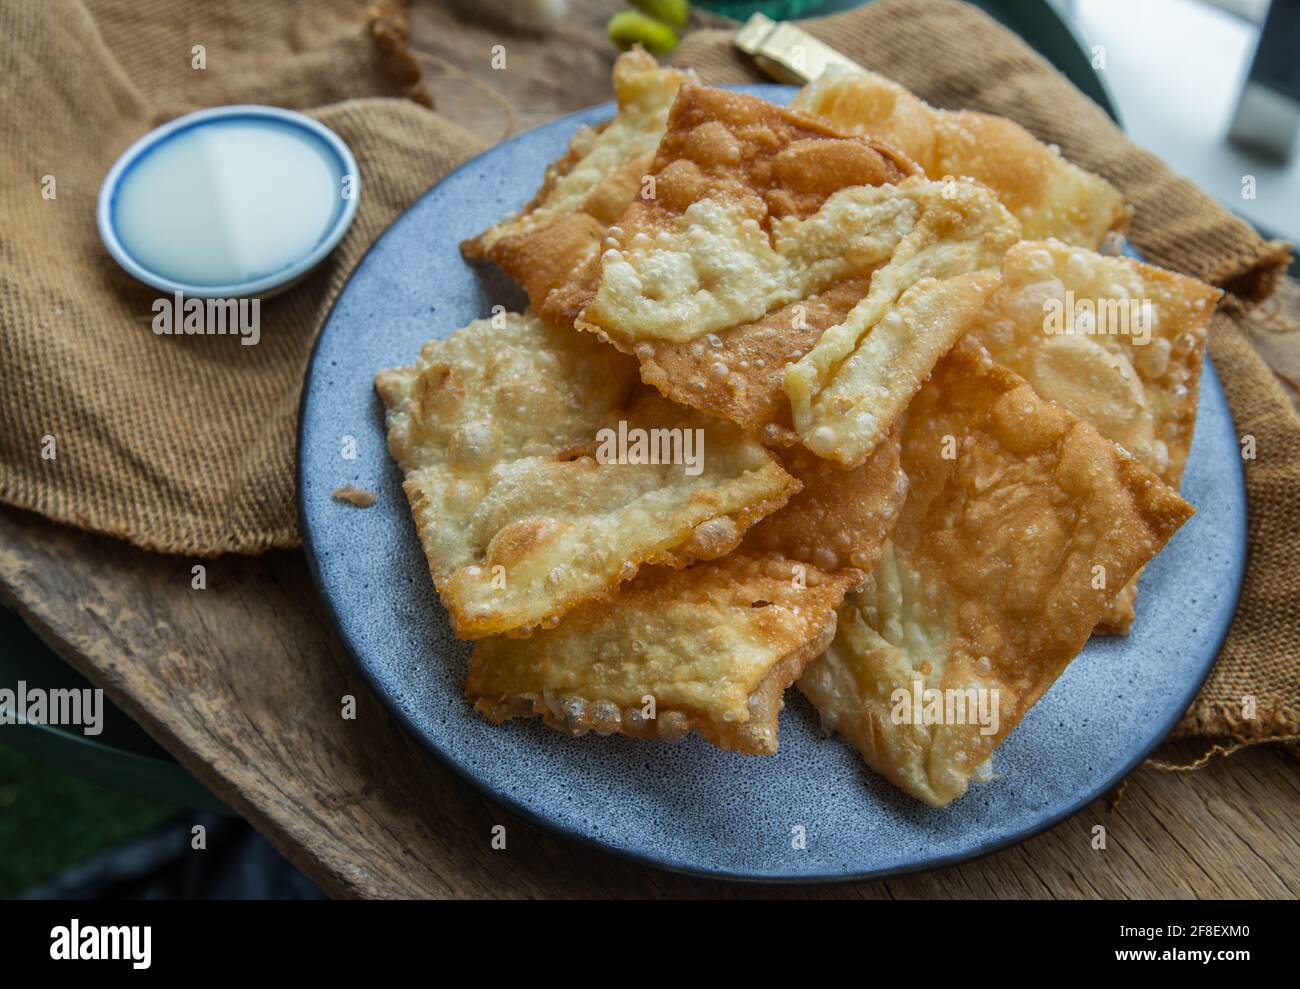 https://c8.alamy.com/comp/2F8EXM0/homemade-sweet-crispy-thai-roti-thai-pancake-served-with-sweetened-condensed-milk-on-ceramic-plate-delicious-thai-dessert-selective-focus-2F8EXM0.jpg